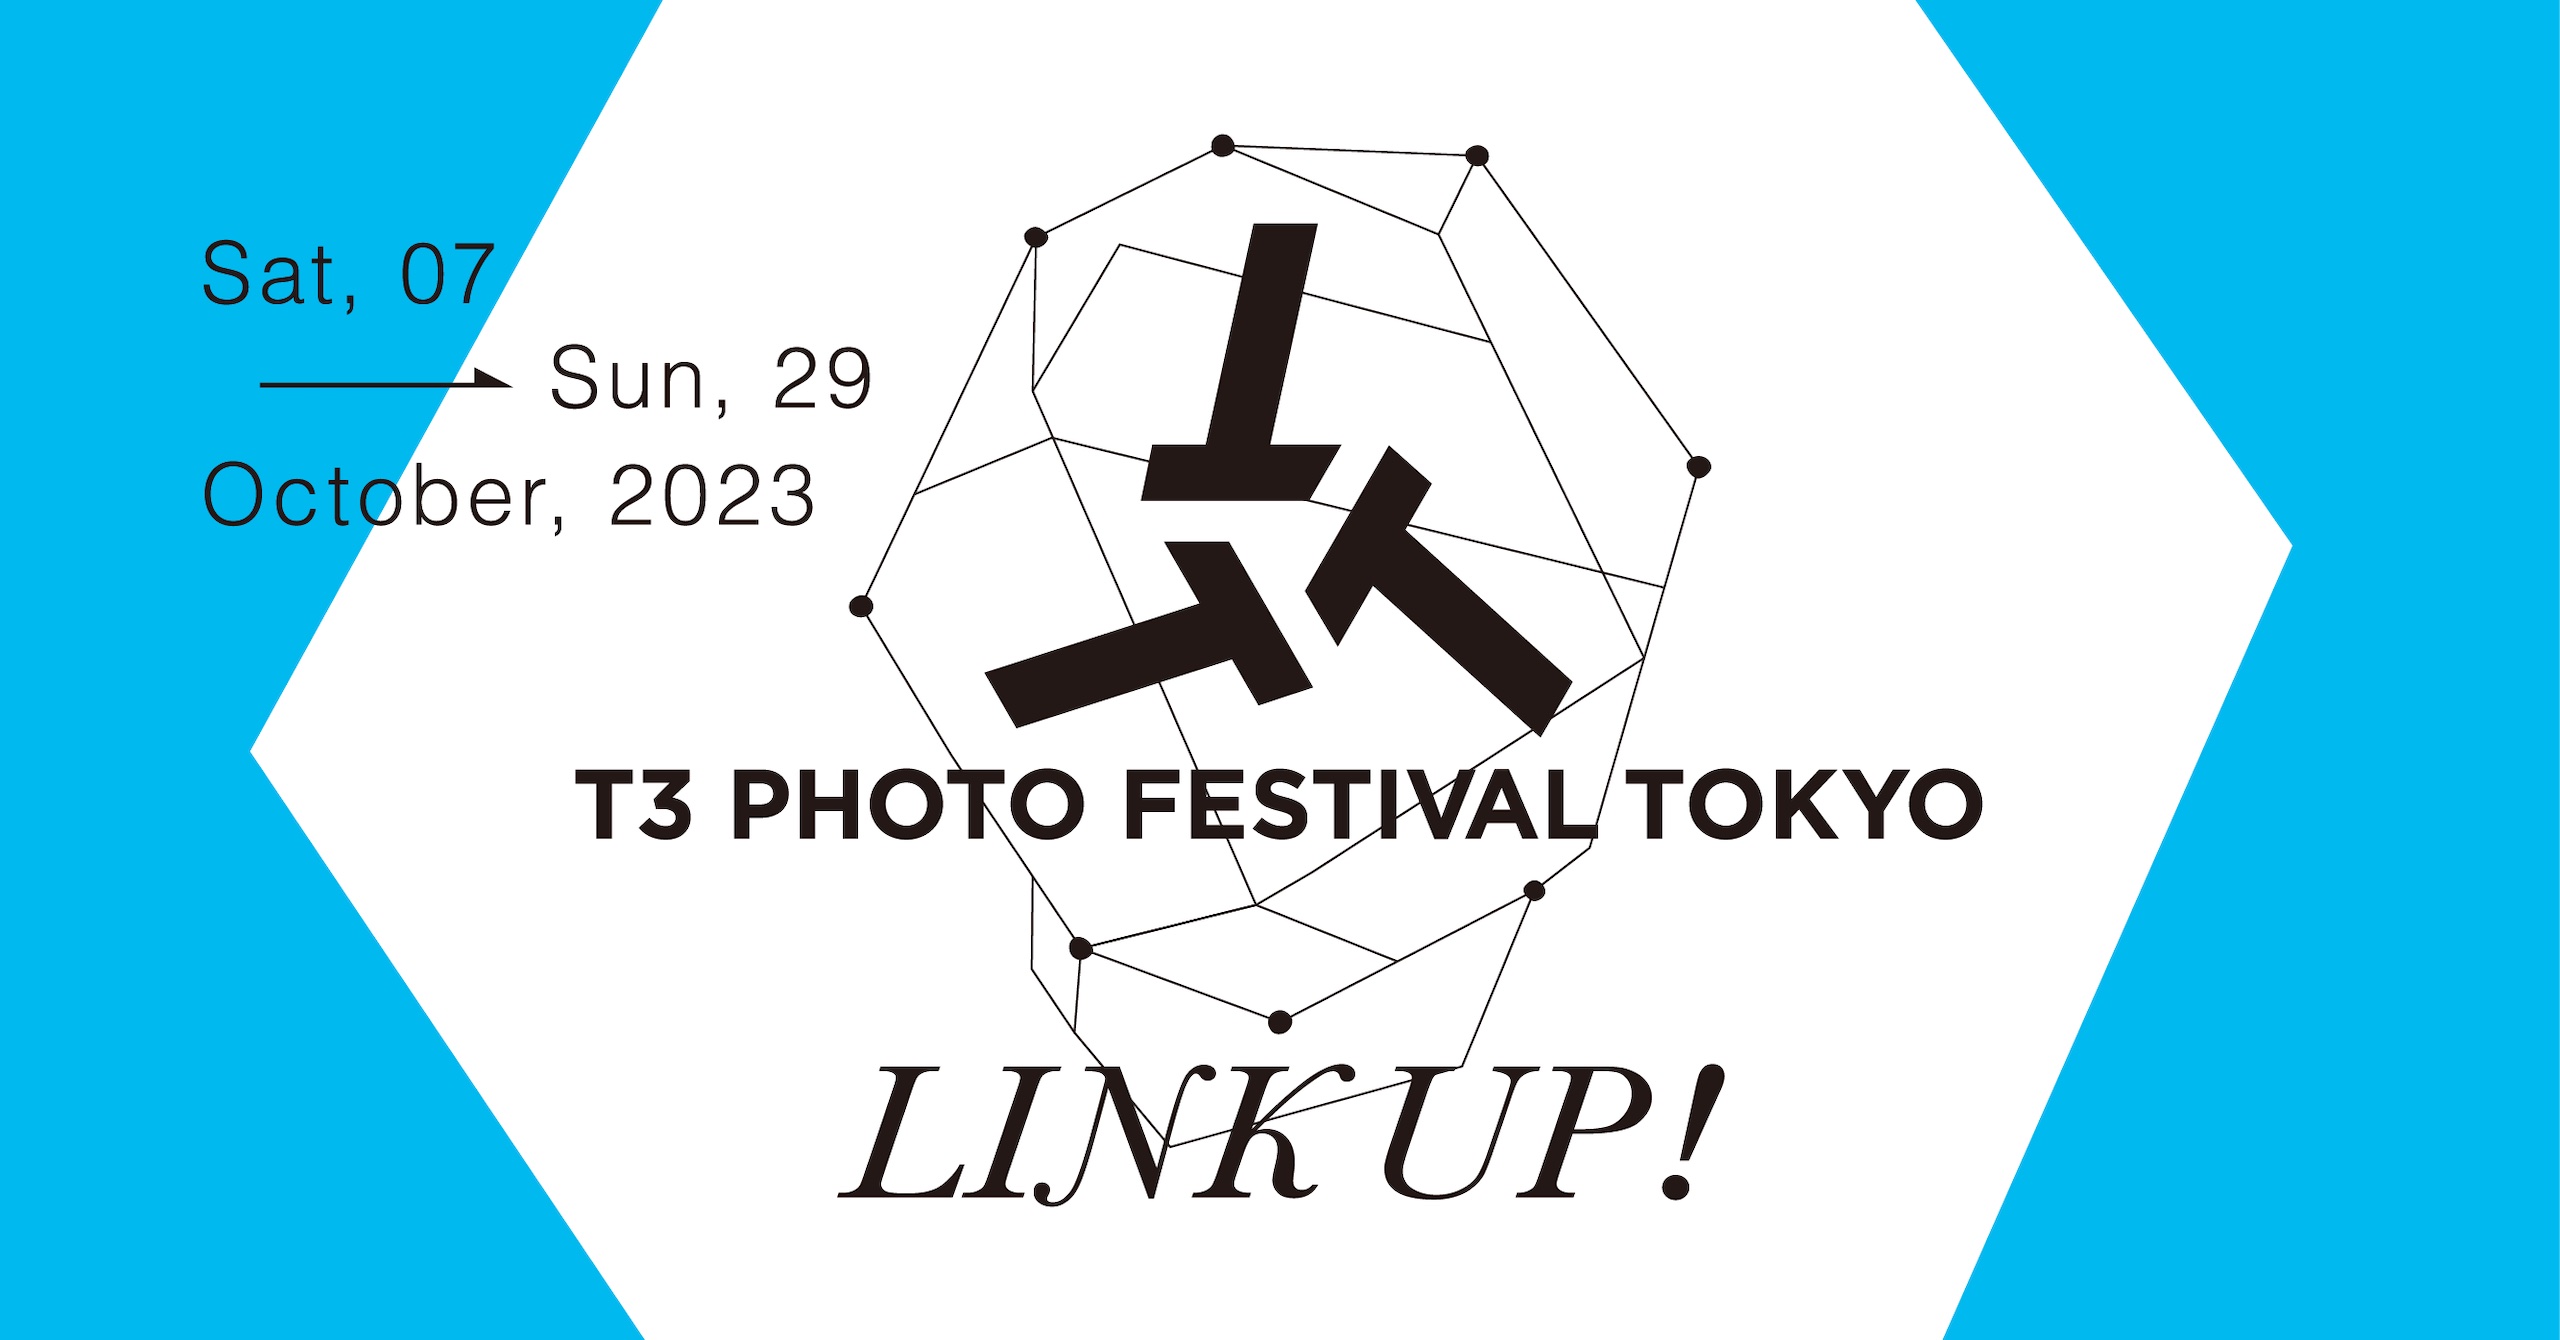 T3 PHOTO FESTIVAL TOKYO